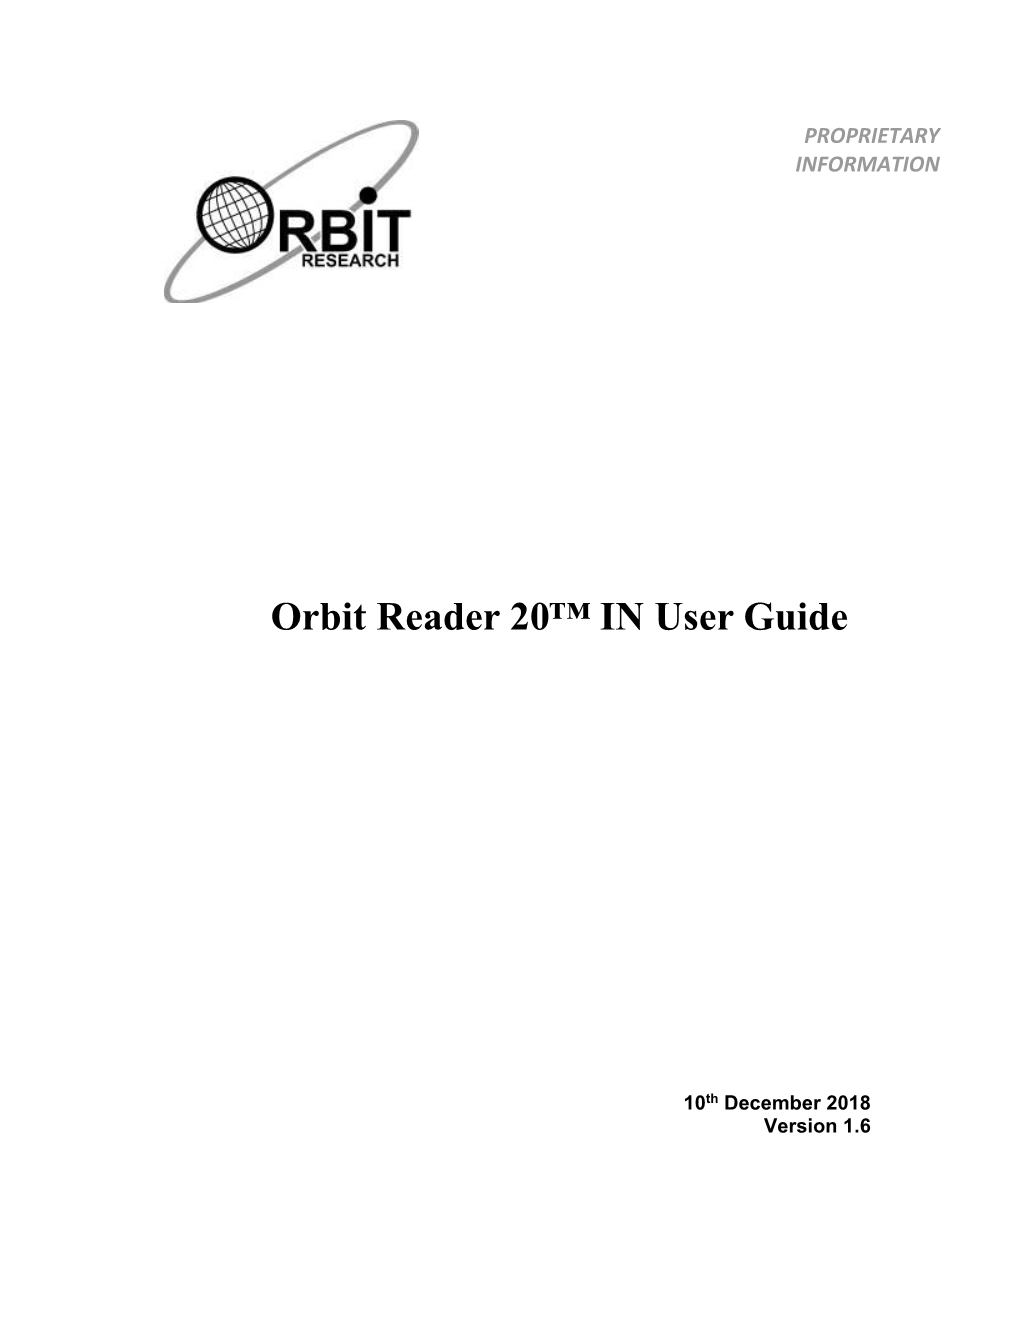 Orbit Reader 20™ in User Guide